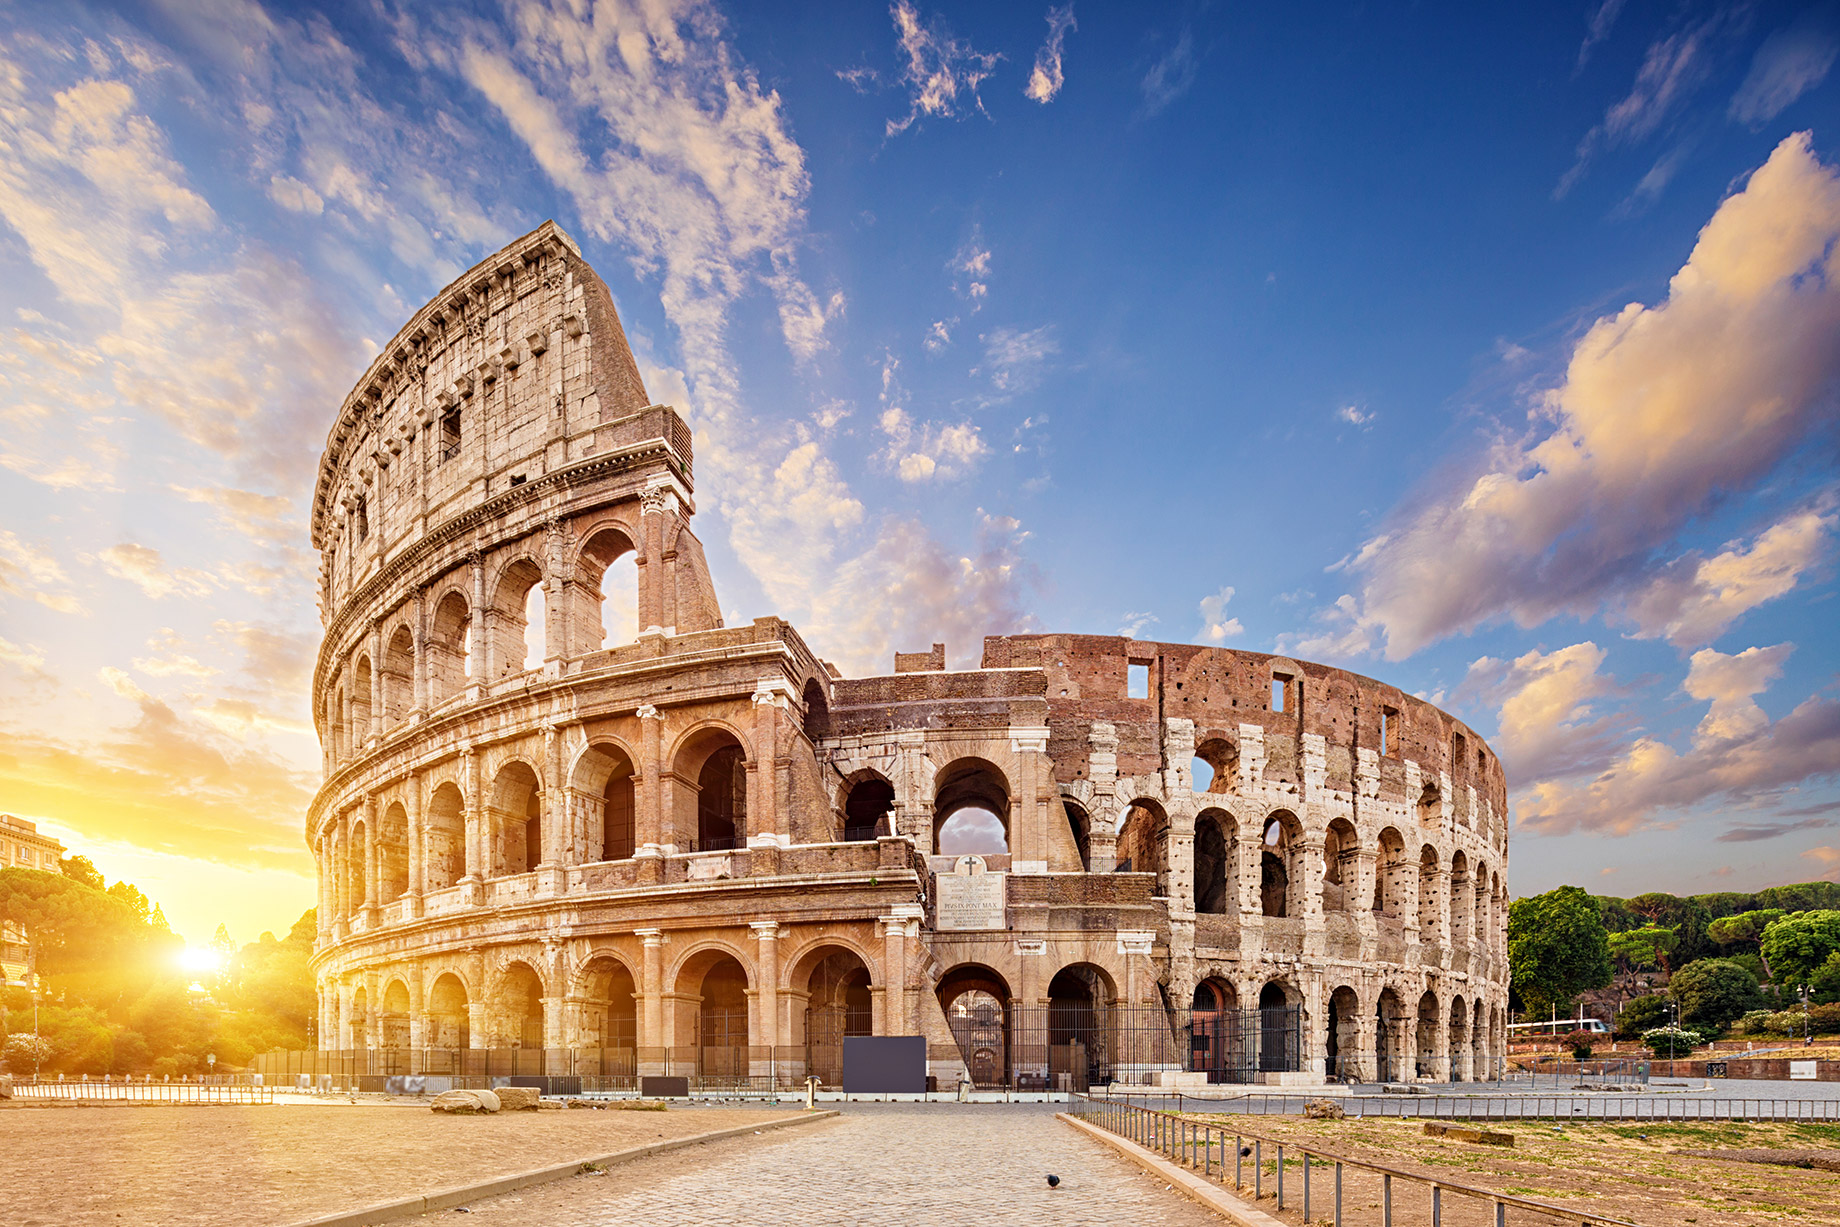 Roman Colosseum – Rome, Italy